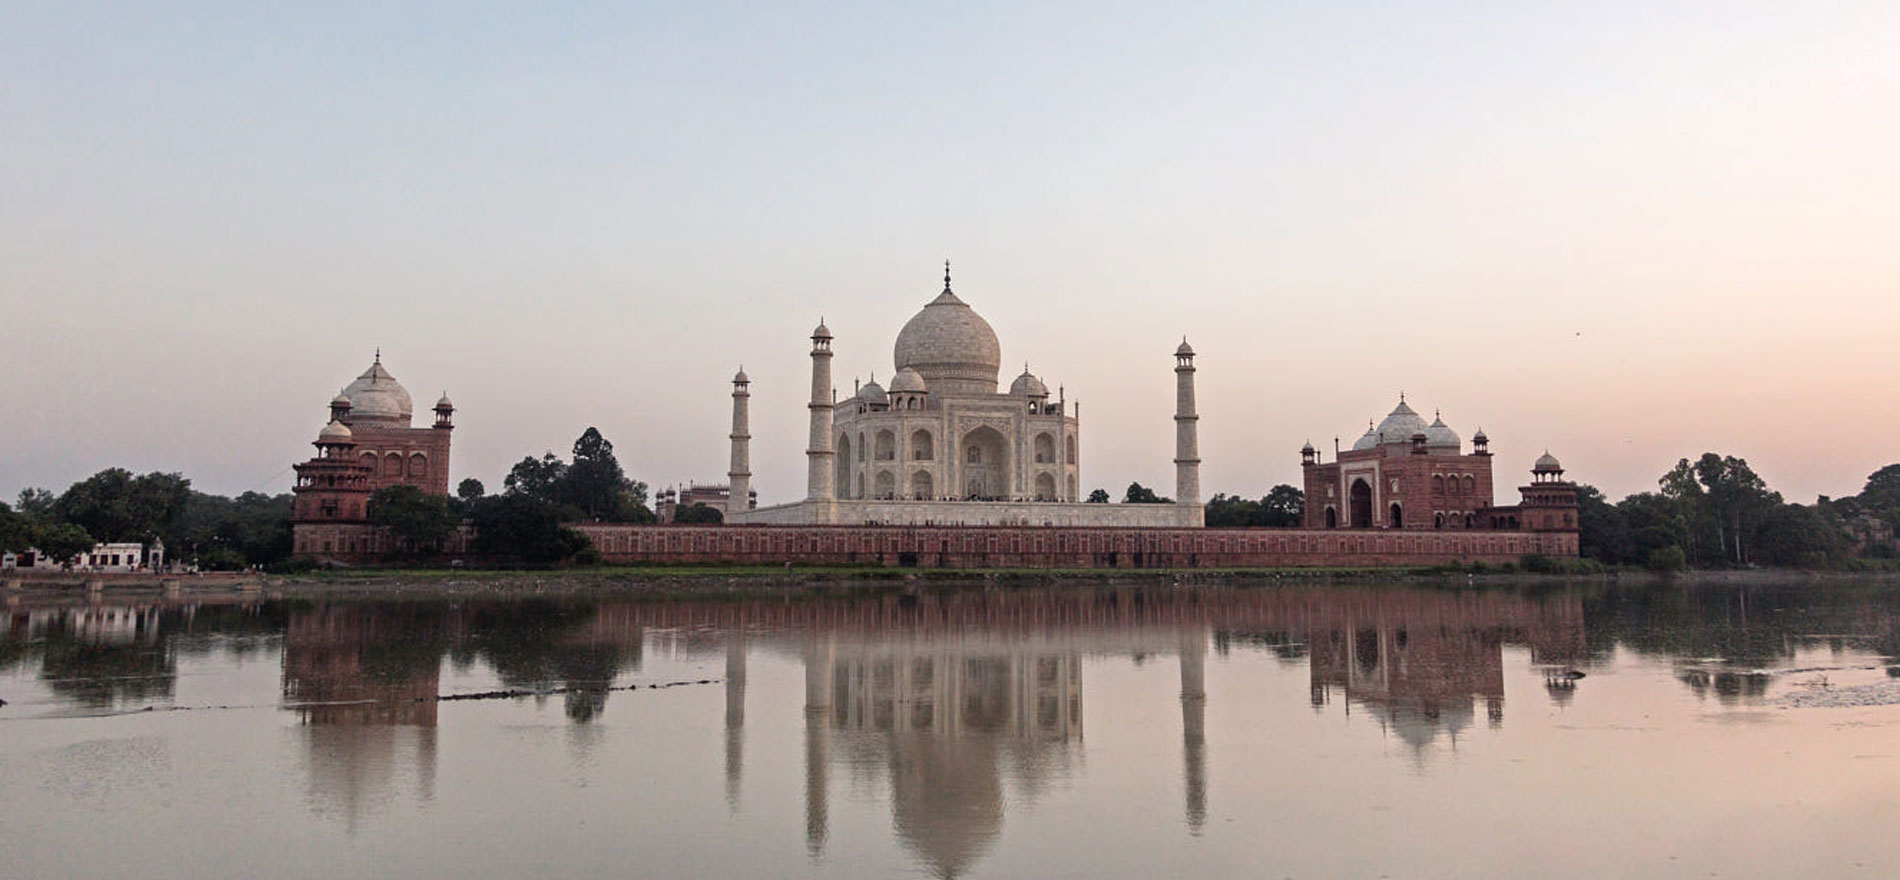 Tour Guide For Taj Mahal India